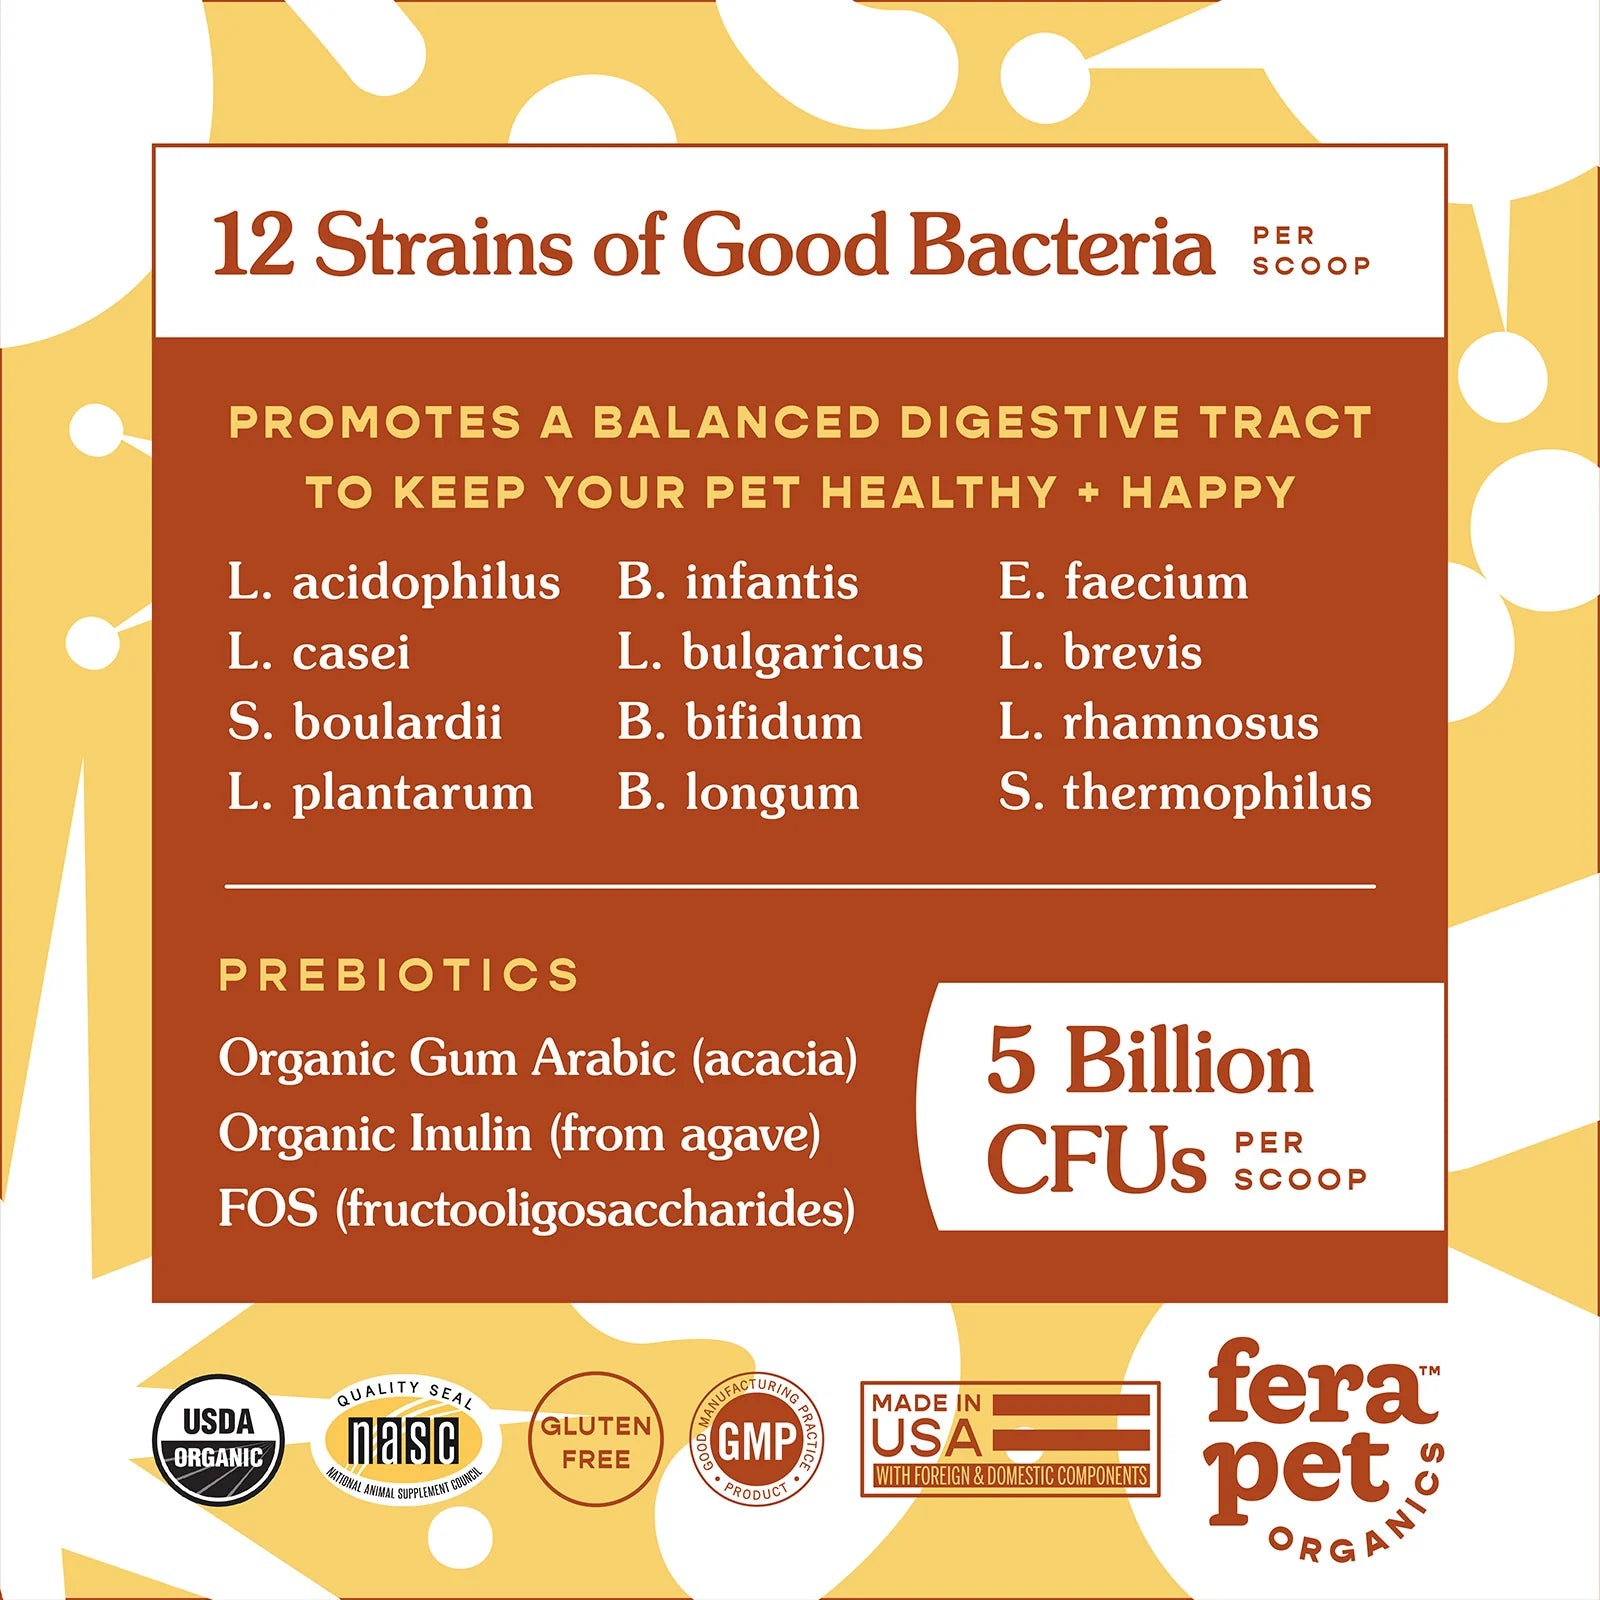 USDA Organic Probiotics with Prebiotics For Dogs and Cats